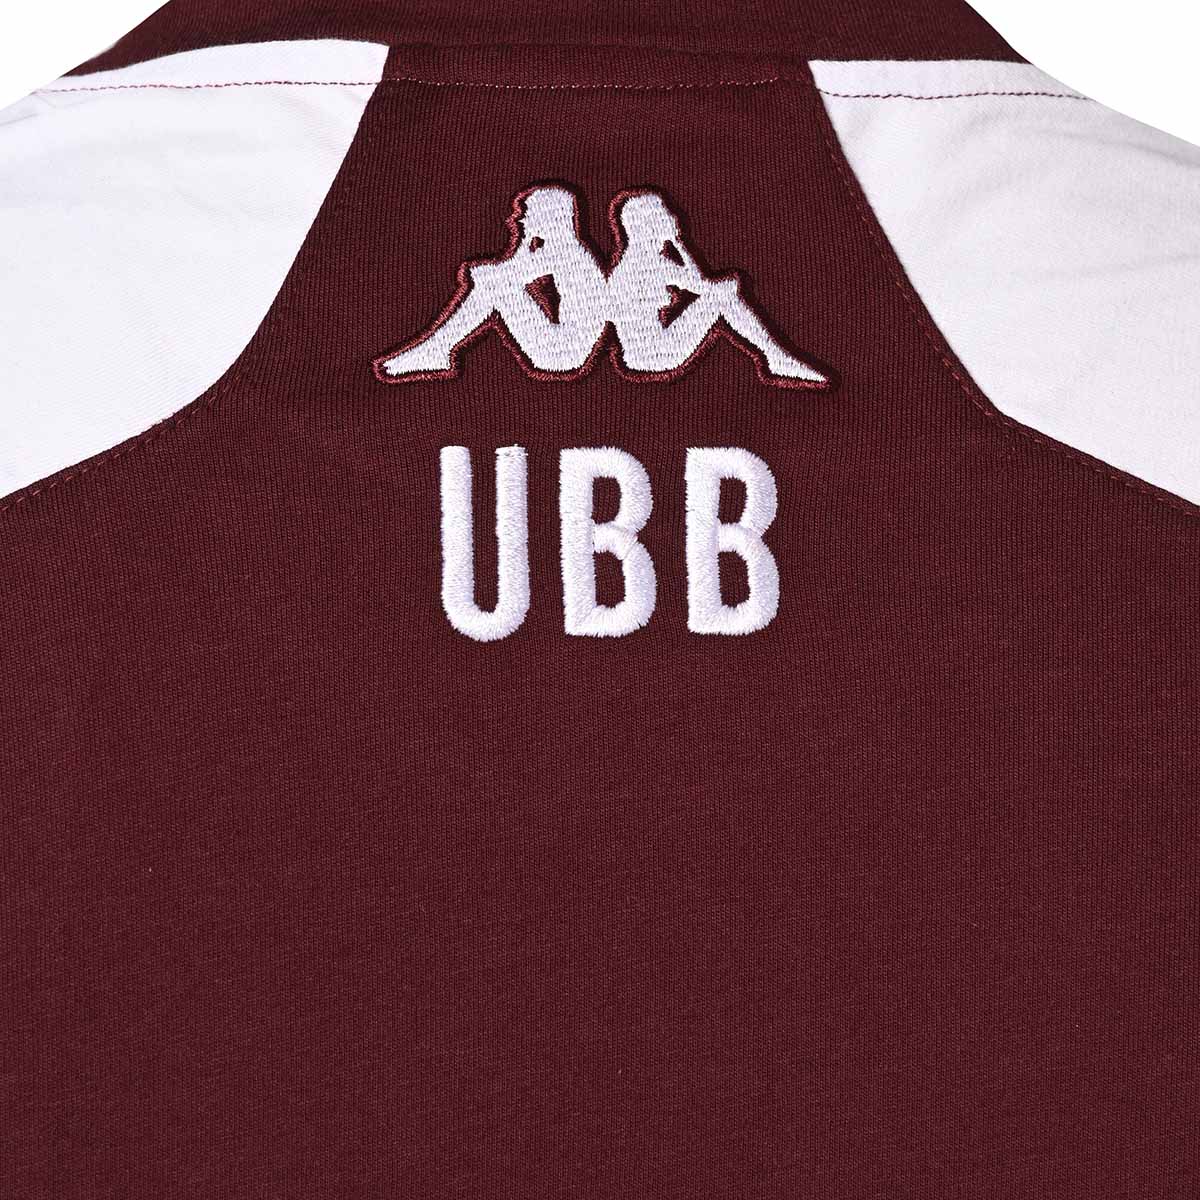 T-shirt Ayba 7 UBB 23/24 Rouge Homme